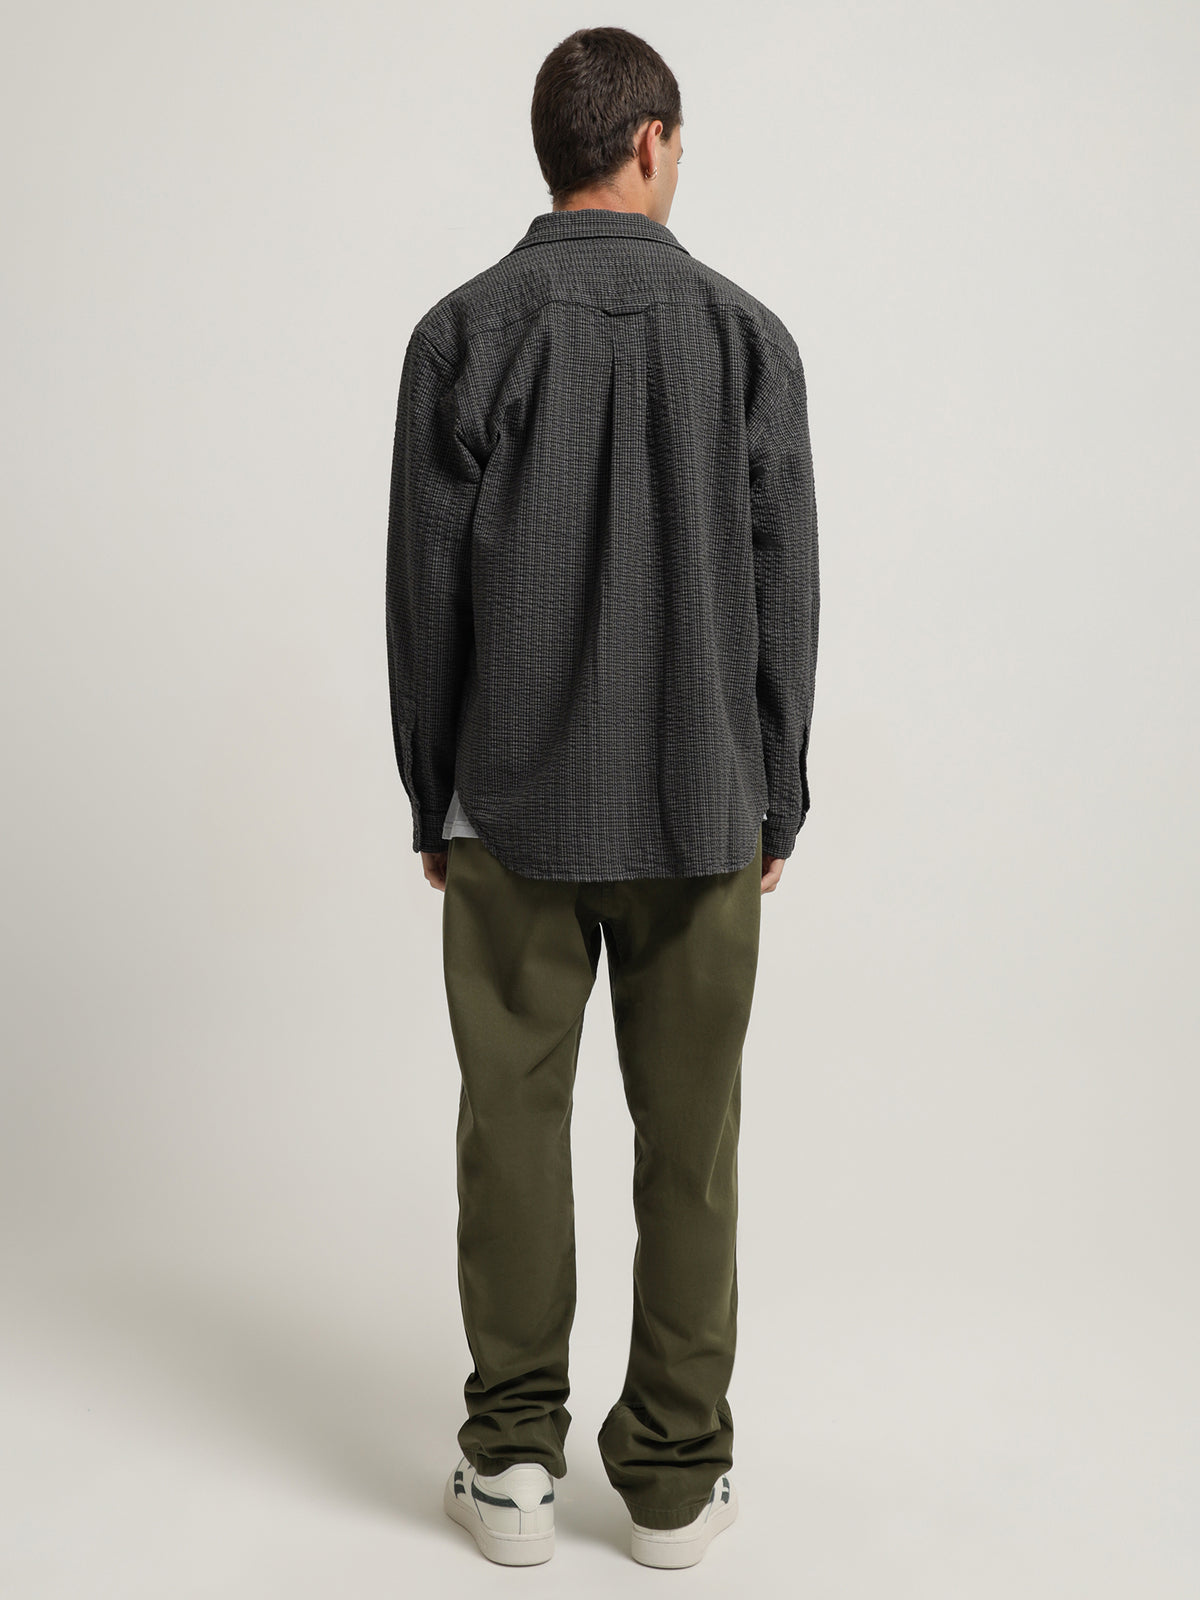 O.G Seersucker Canyon Shirt in Deep Grey Garment Dyed